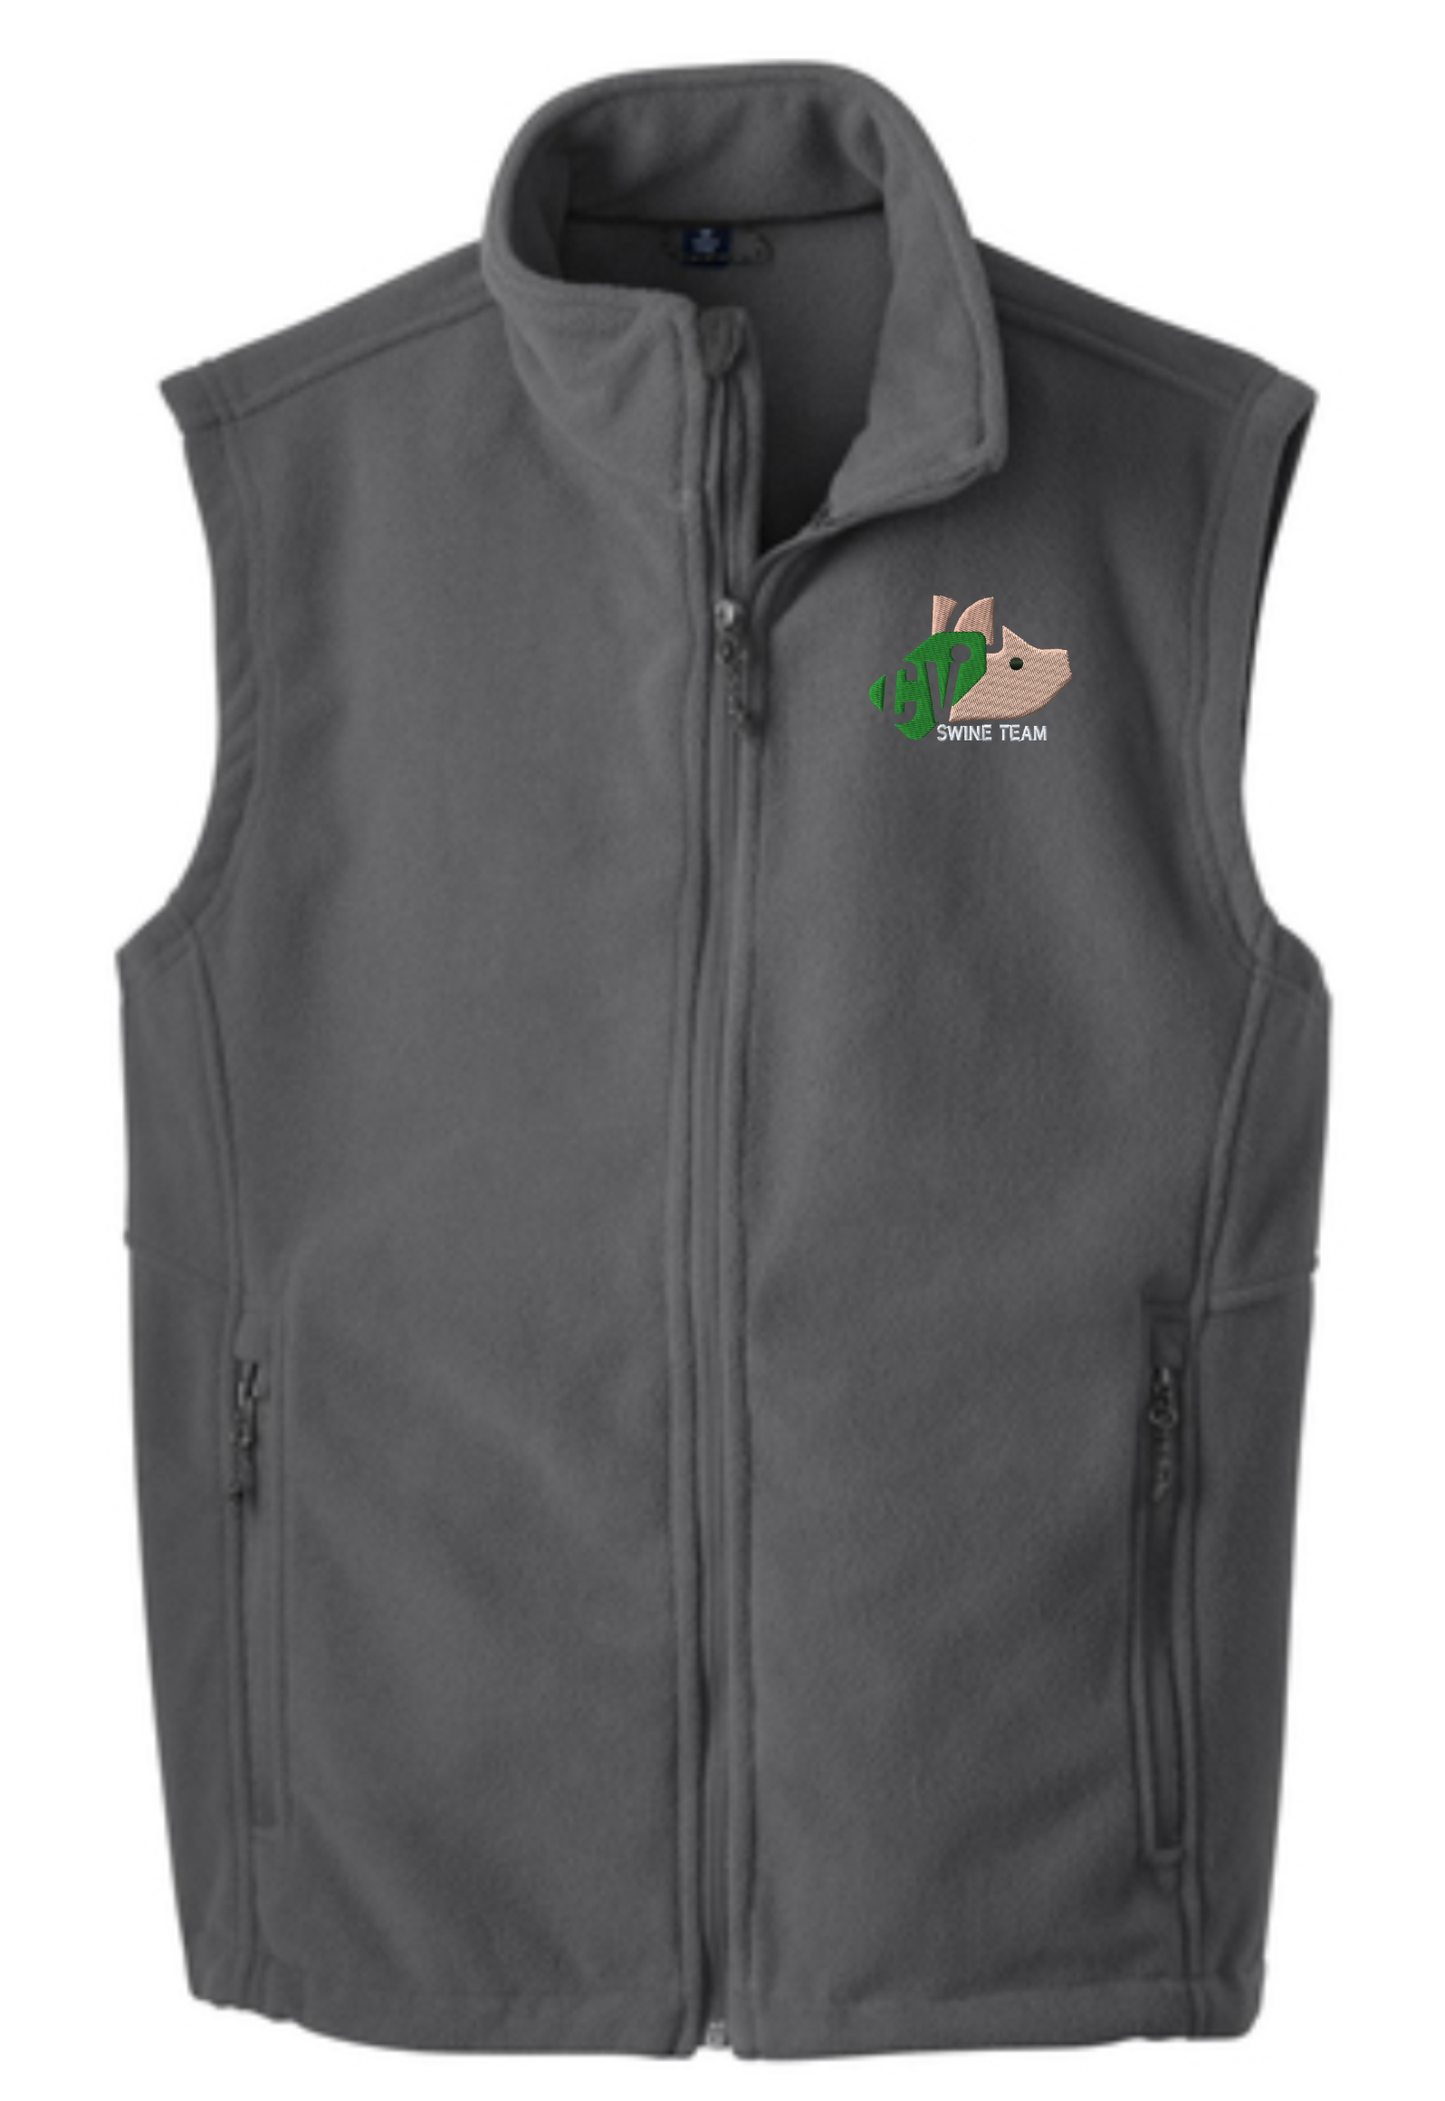 Youth Carmel Valley Swine Team Personalized 4-H Port Authority Fleece Vest